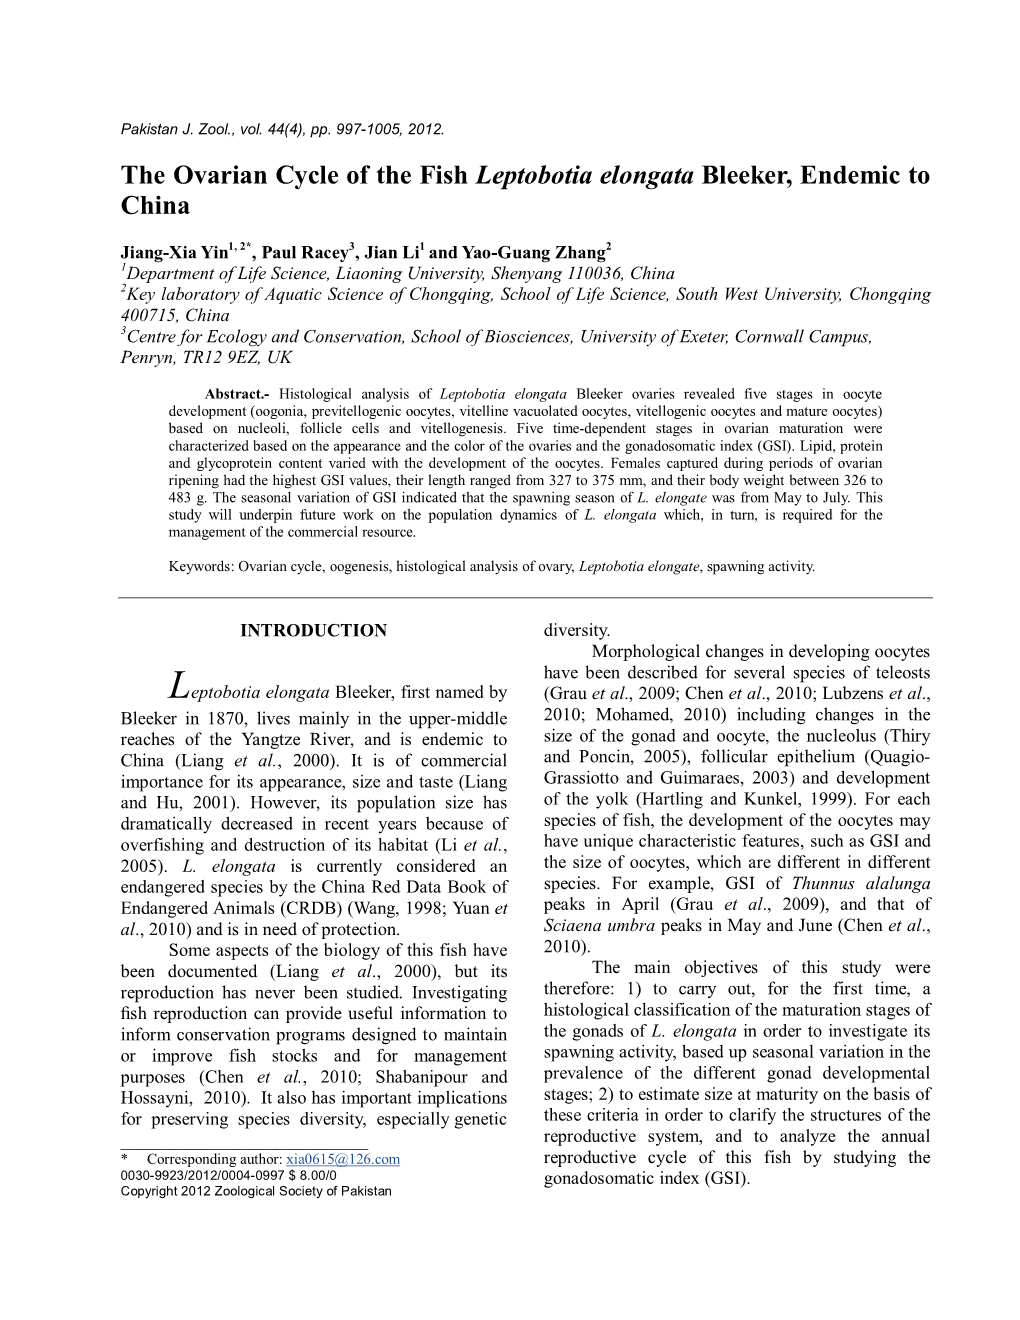 The Ovarian Cycle of the Fish Leptobotia Elongata Bleeker, Endemic to China